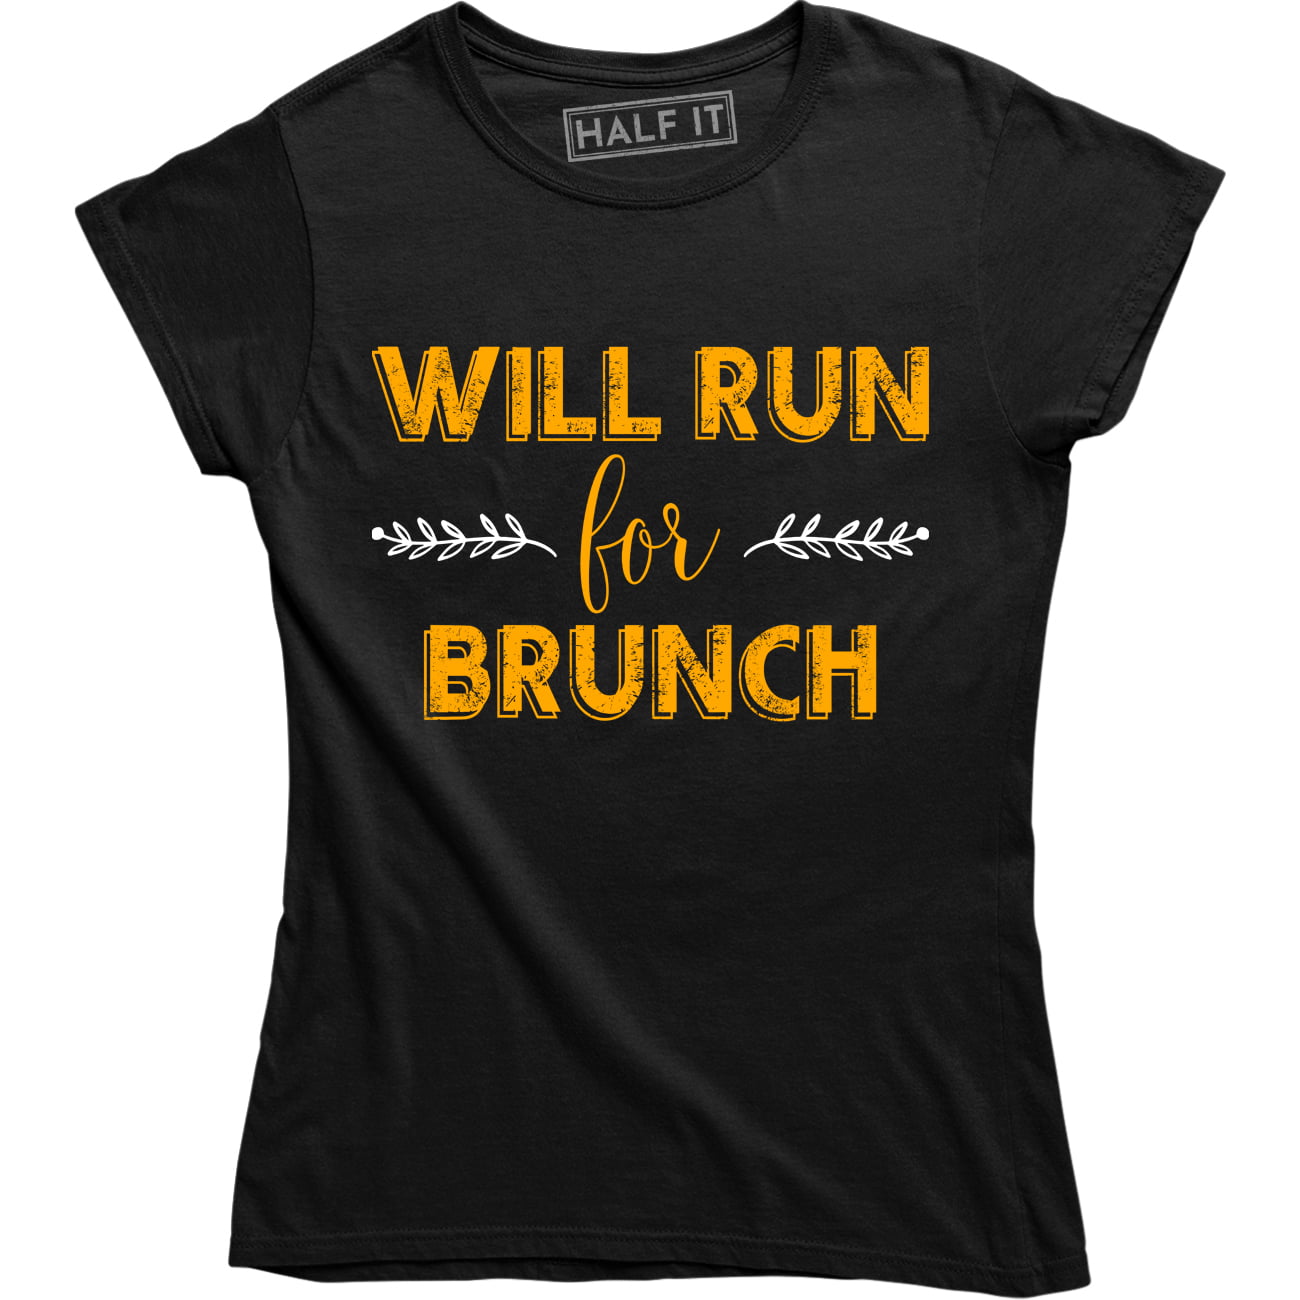 Run Brunch Funny Vegan Vegetarian Fitness Women's T-Shirt -